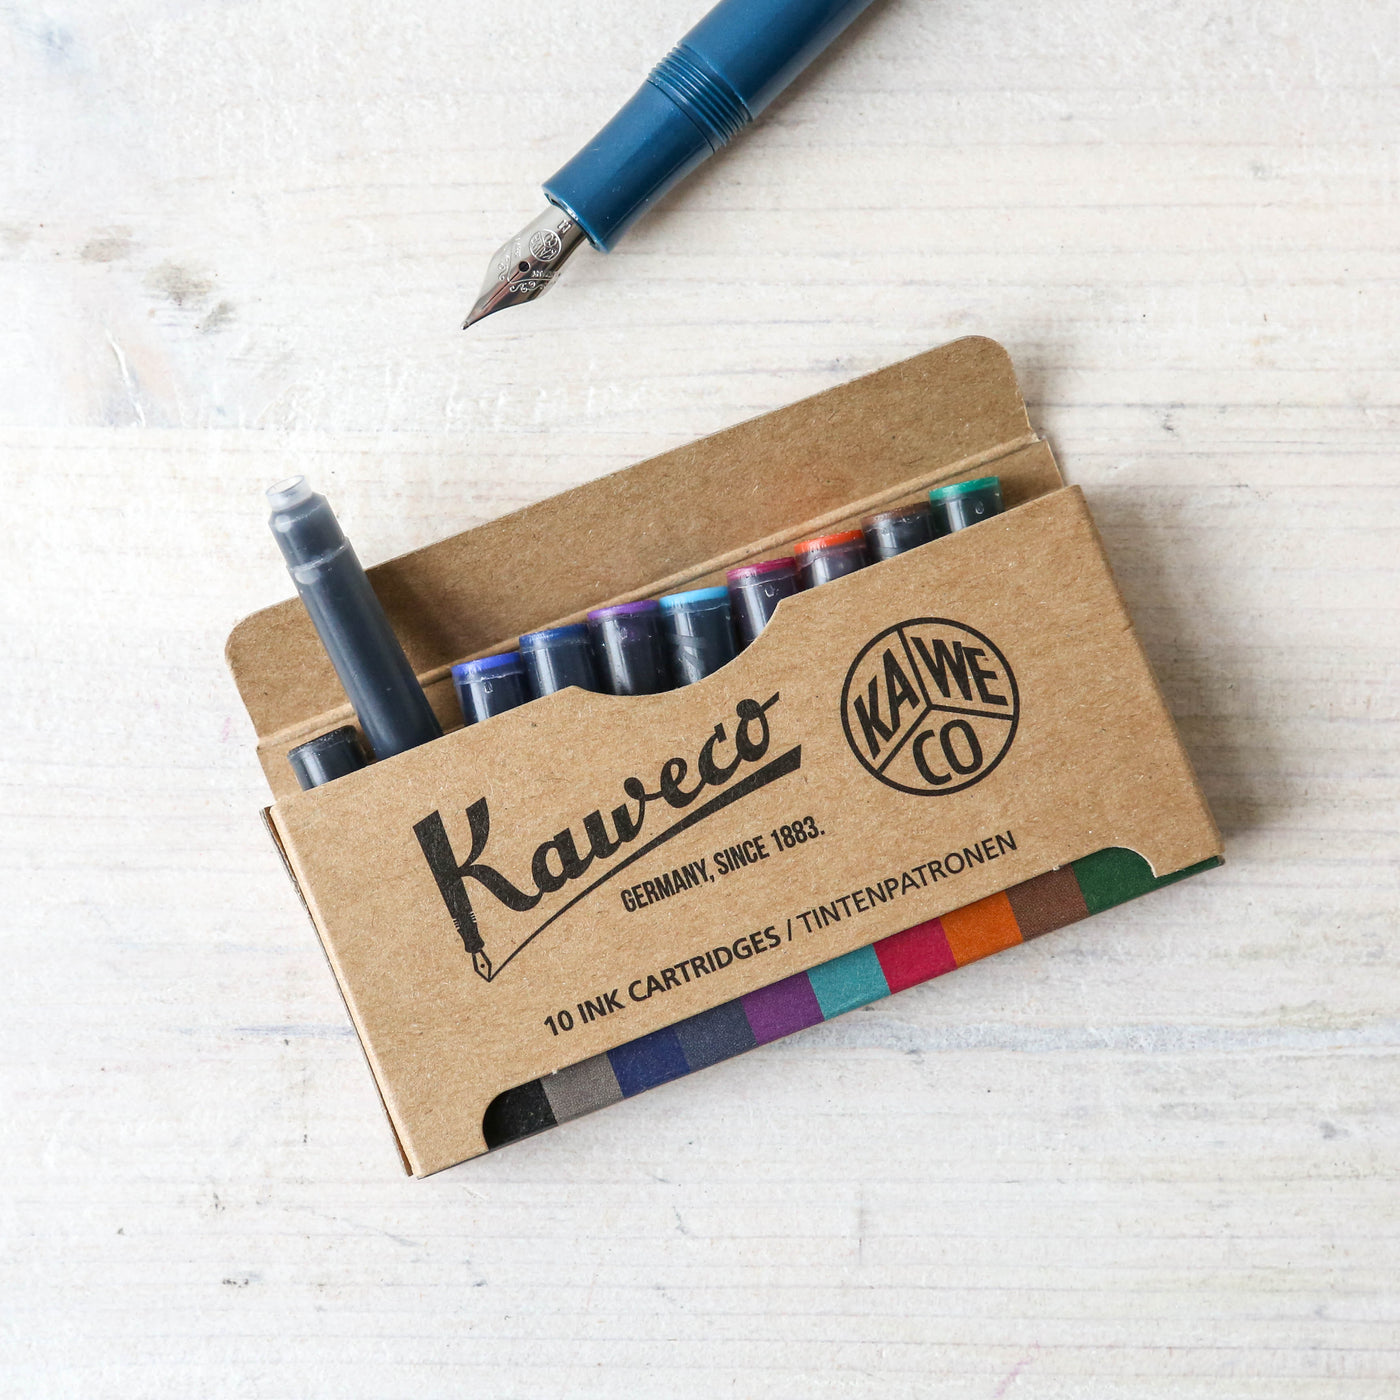 Kaweco Ink Cartridge Colour Mix 10 Pack